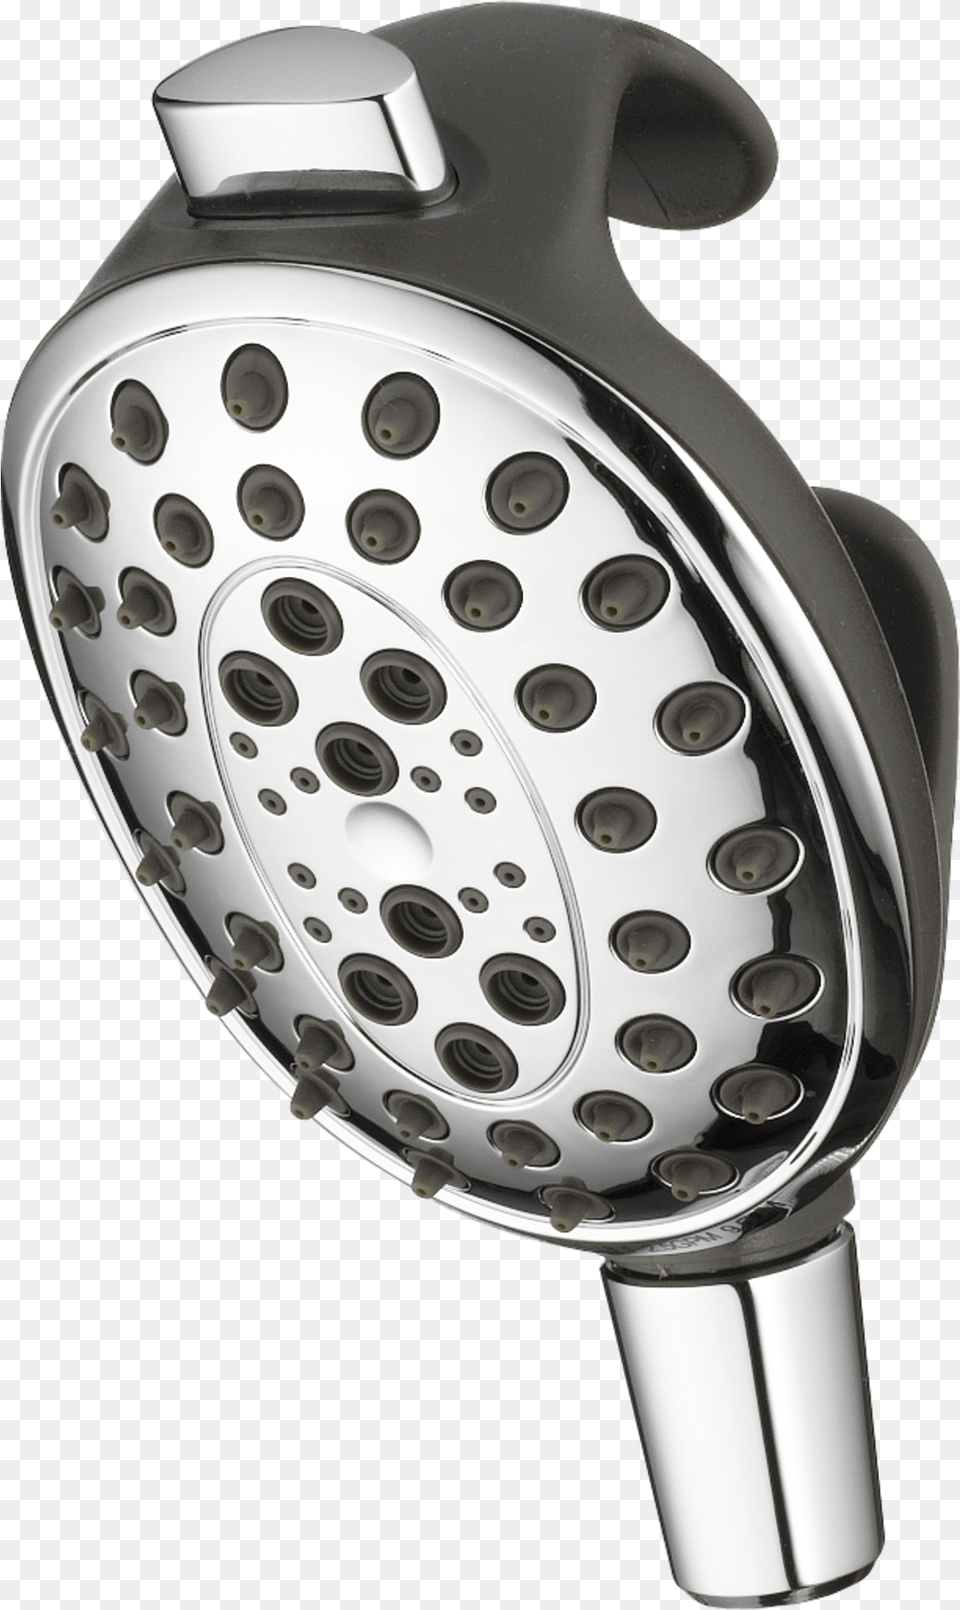 Shower Heads Mesh, Indoors, Bathroom, Room, Shower Faucet Png